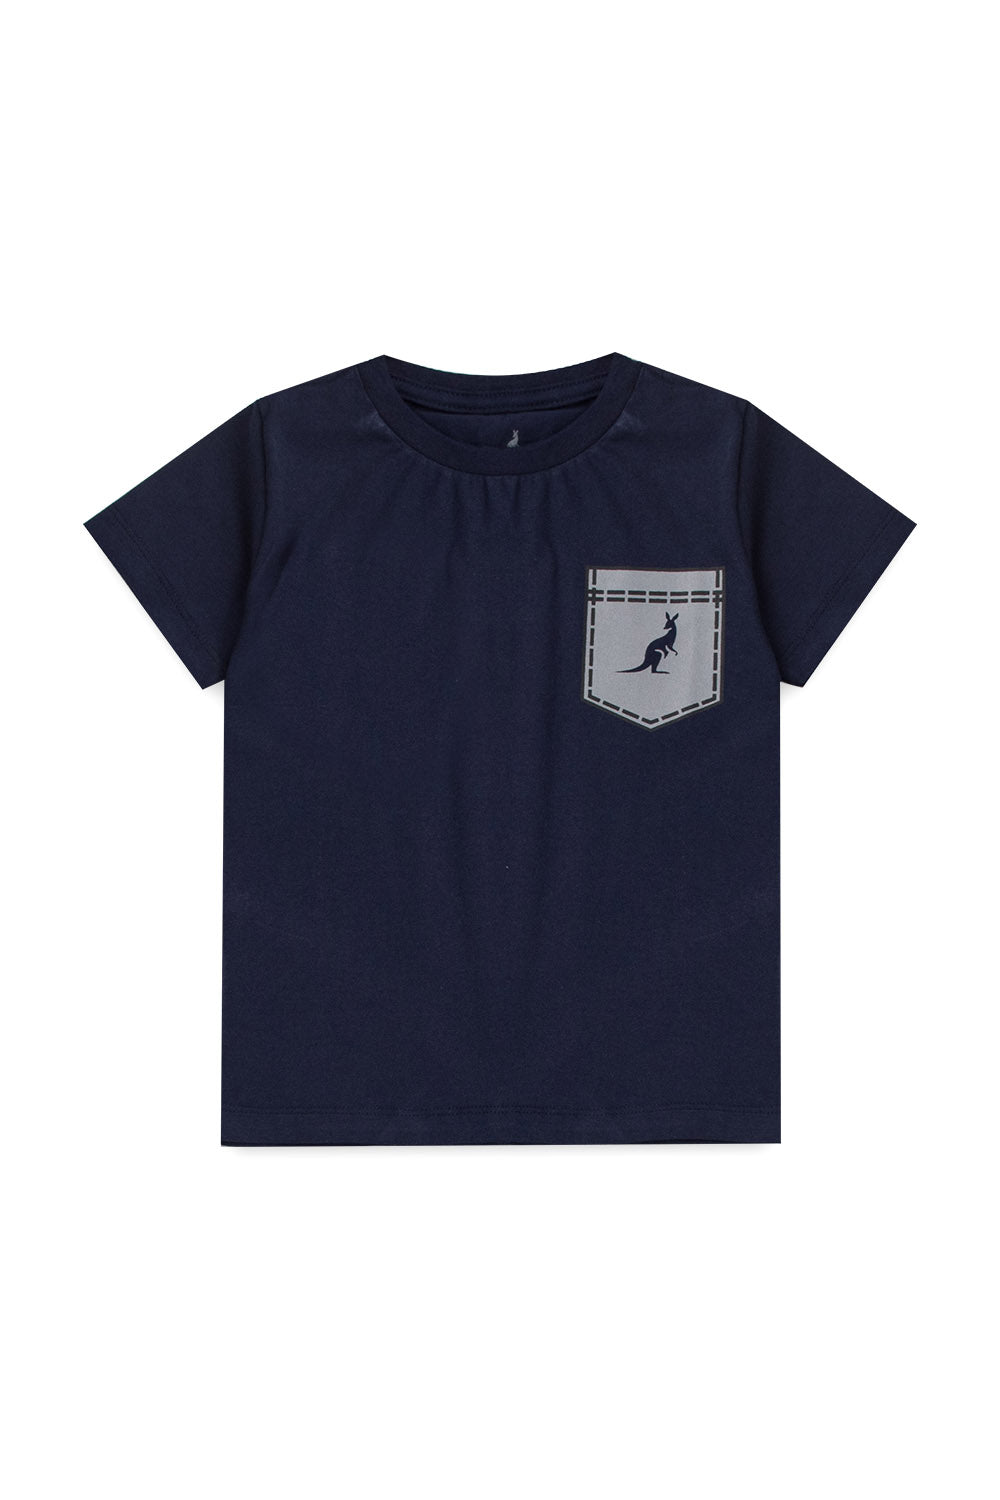 POCKET Boy T-Shirts + Shorts Set